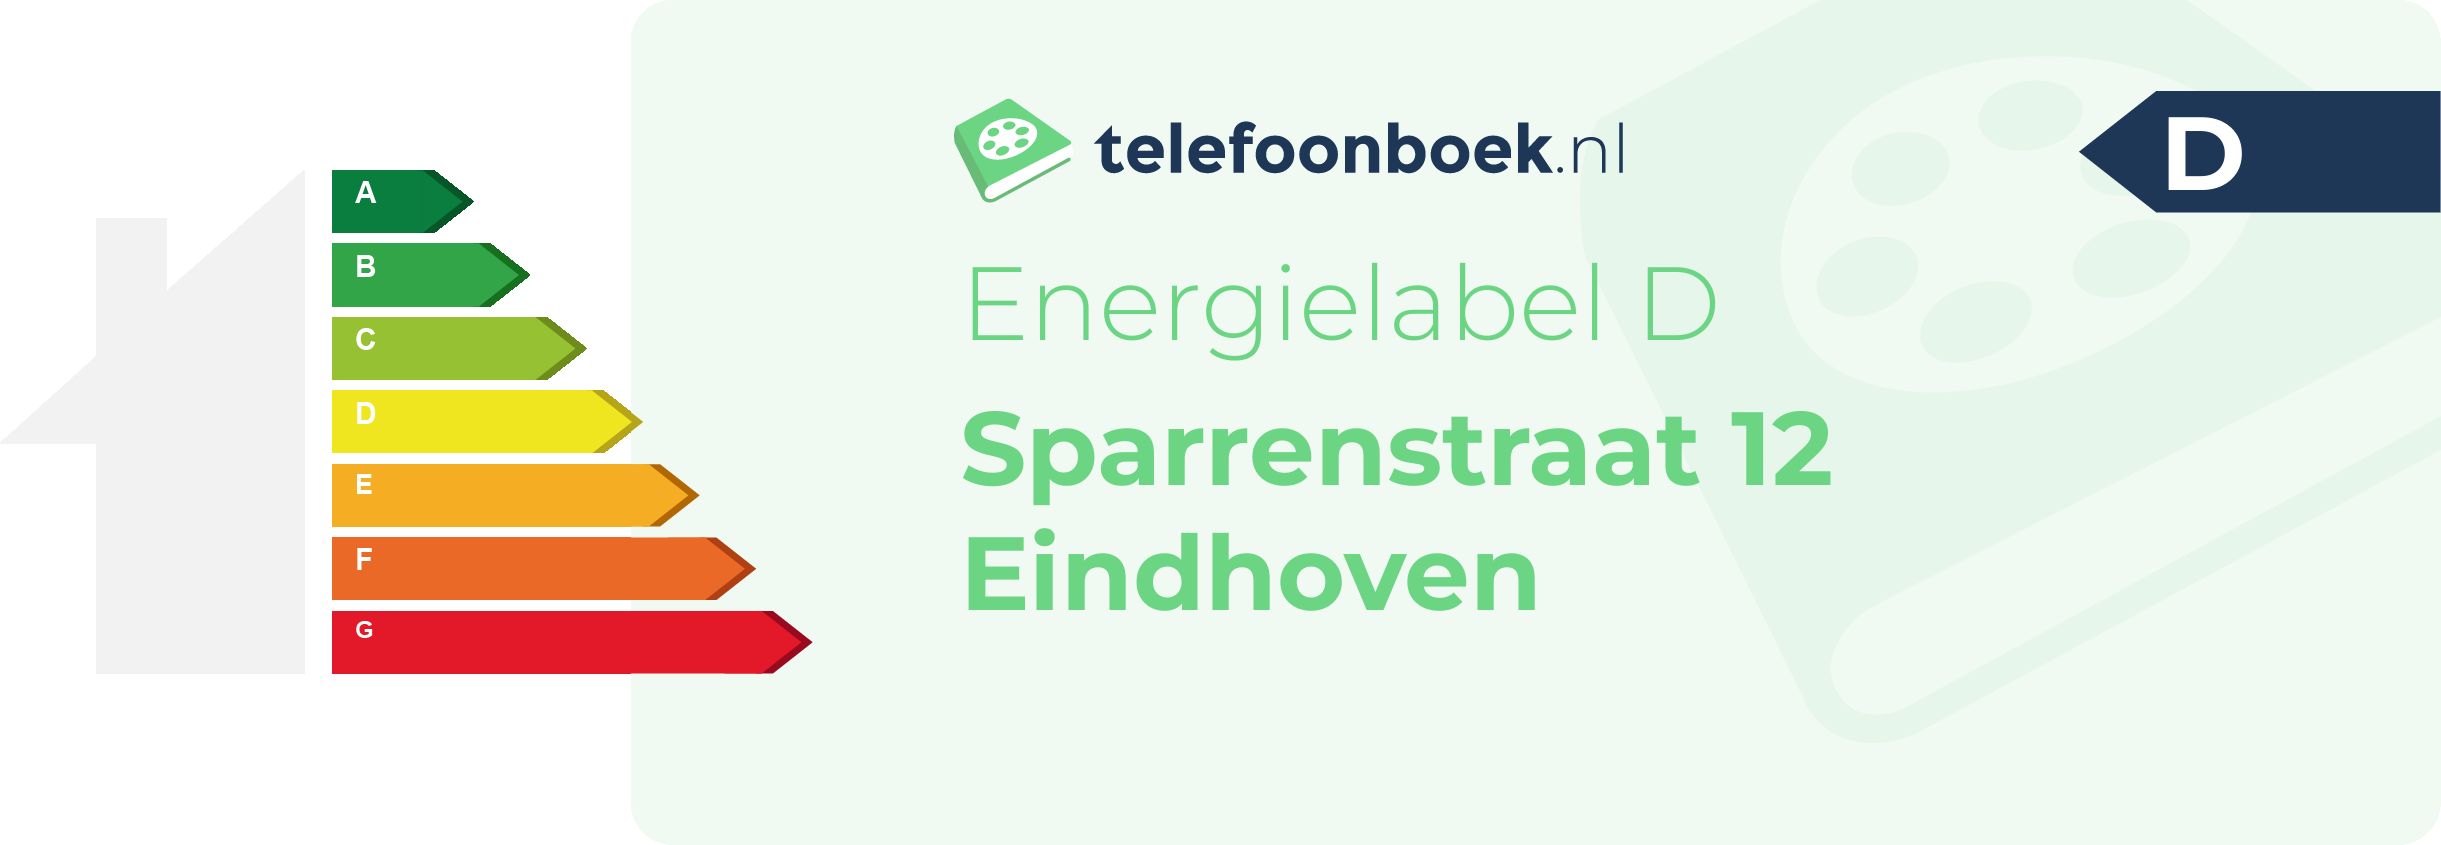 Energielabel Sparrenstraat 12 Eindhoven